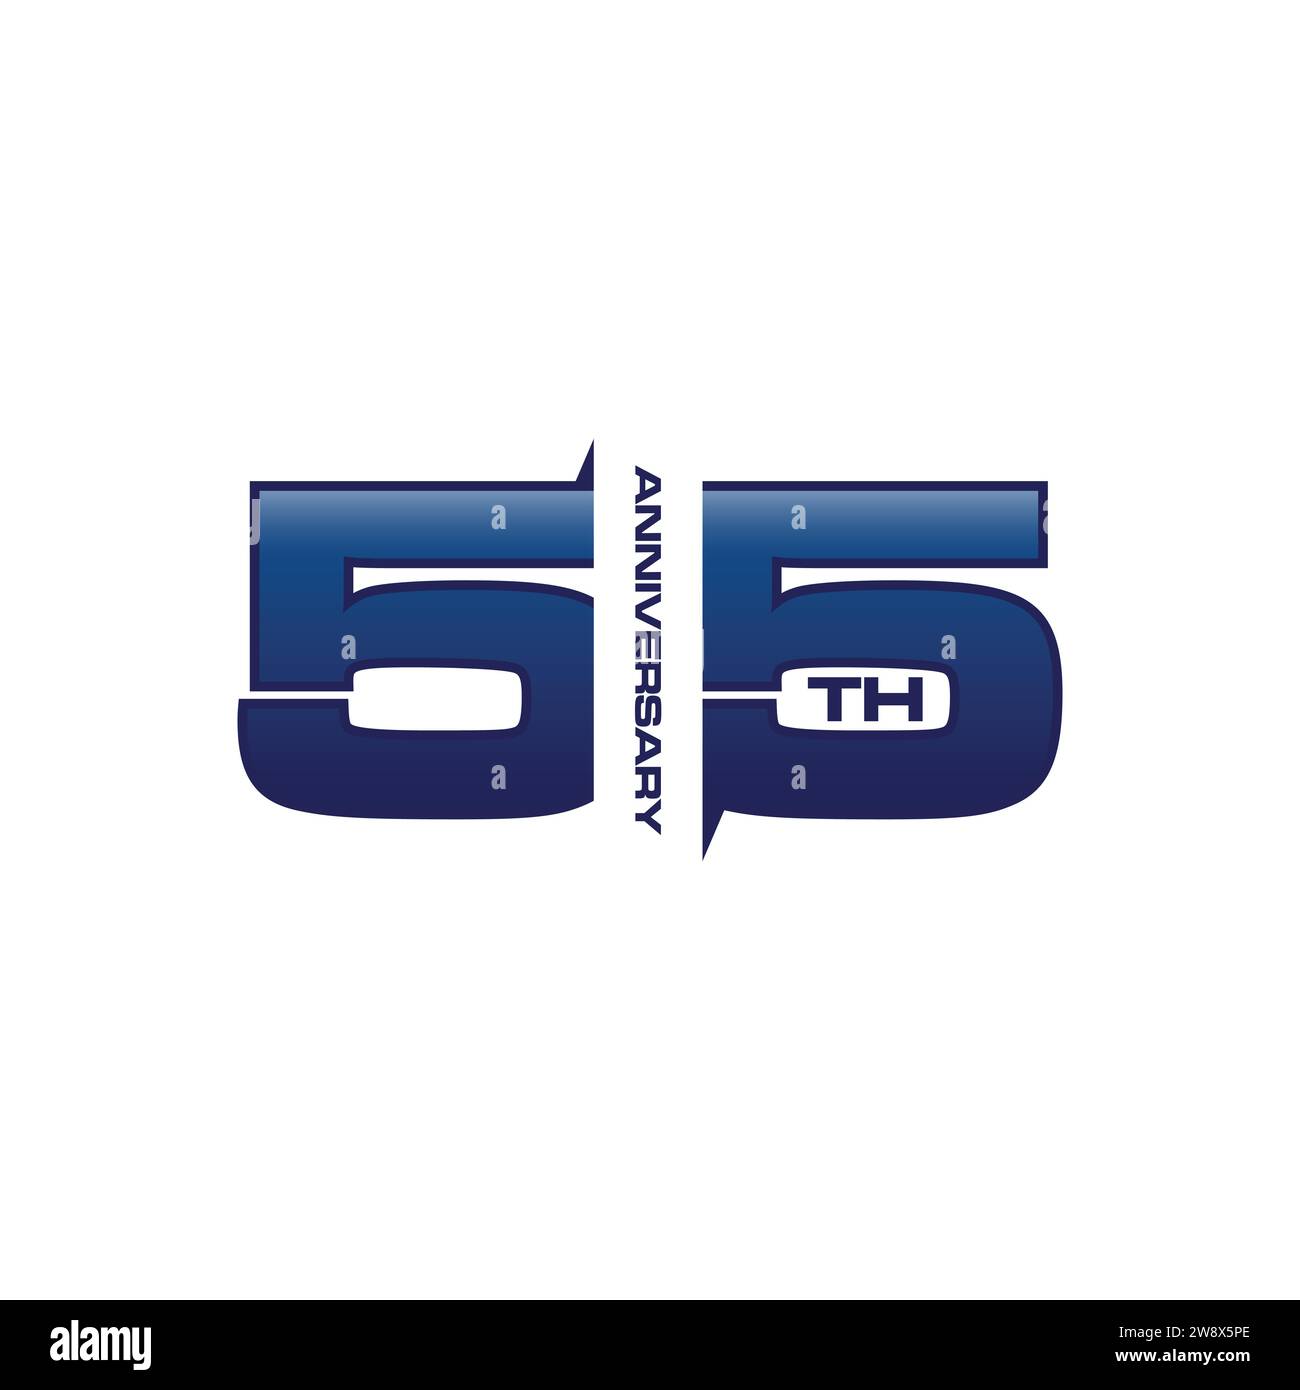 Template logo 55th anniversary years logo.-vector illustration. 55th anniversary logo perfect logo design for anniversary celebration Stock Vector